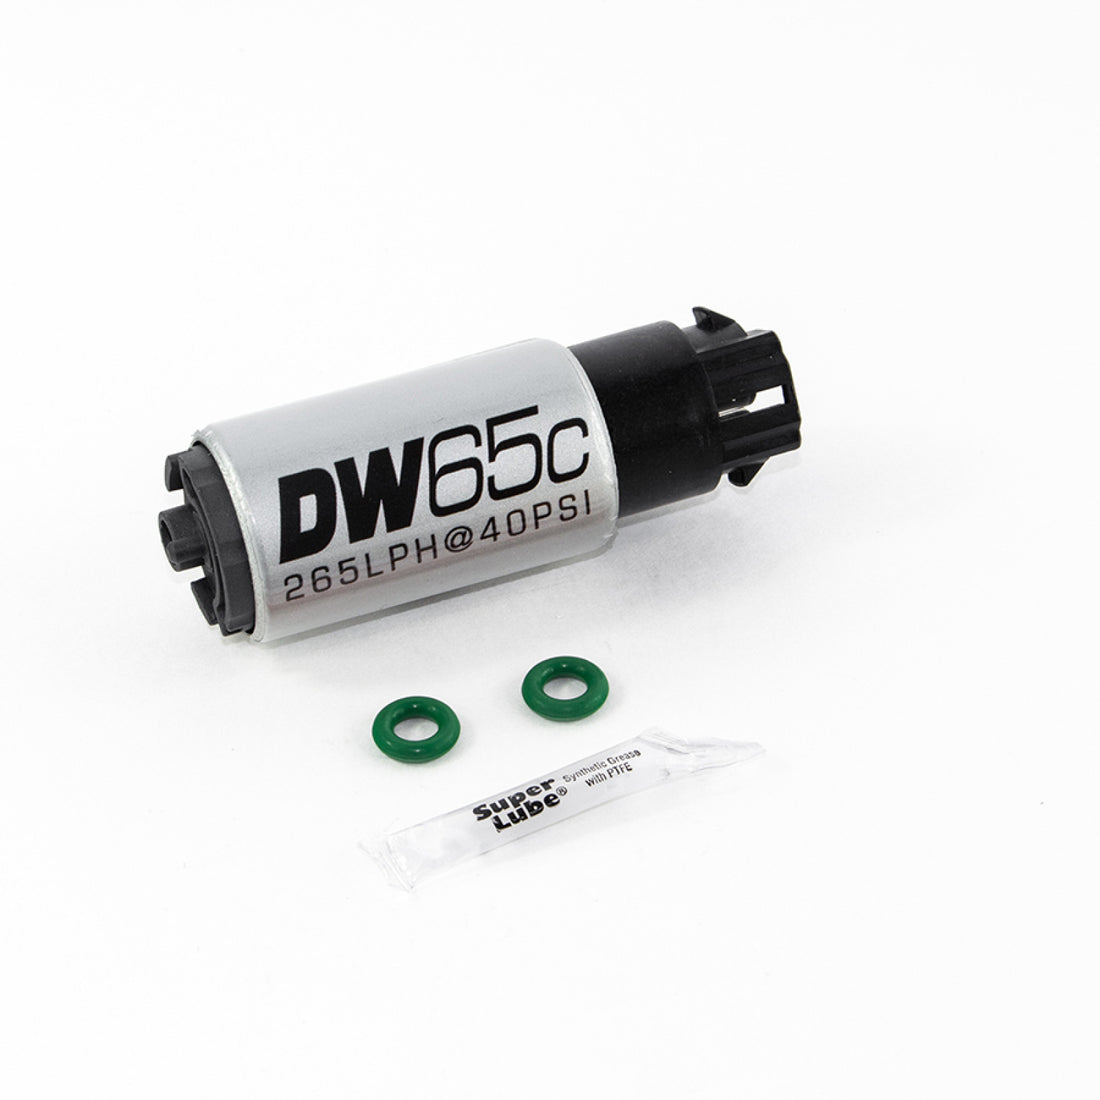 Deatschwerks DW65C 265lph Fuel Pump for 09-15 Nissan GT-R